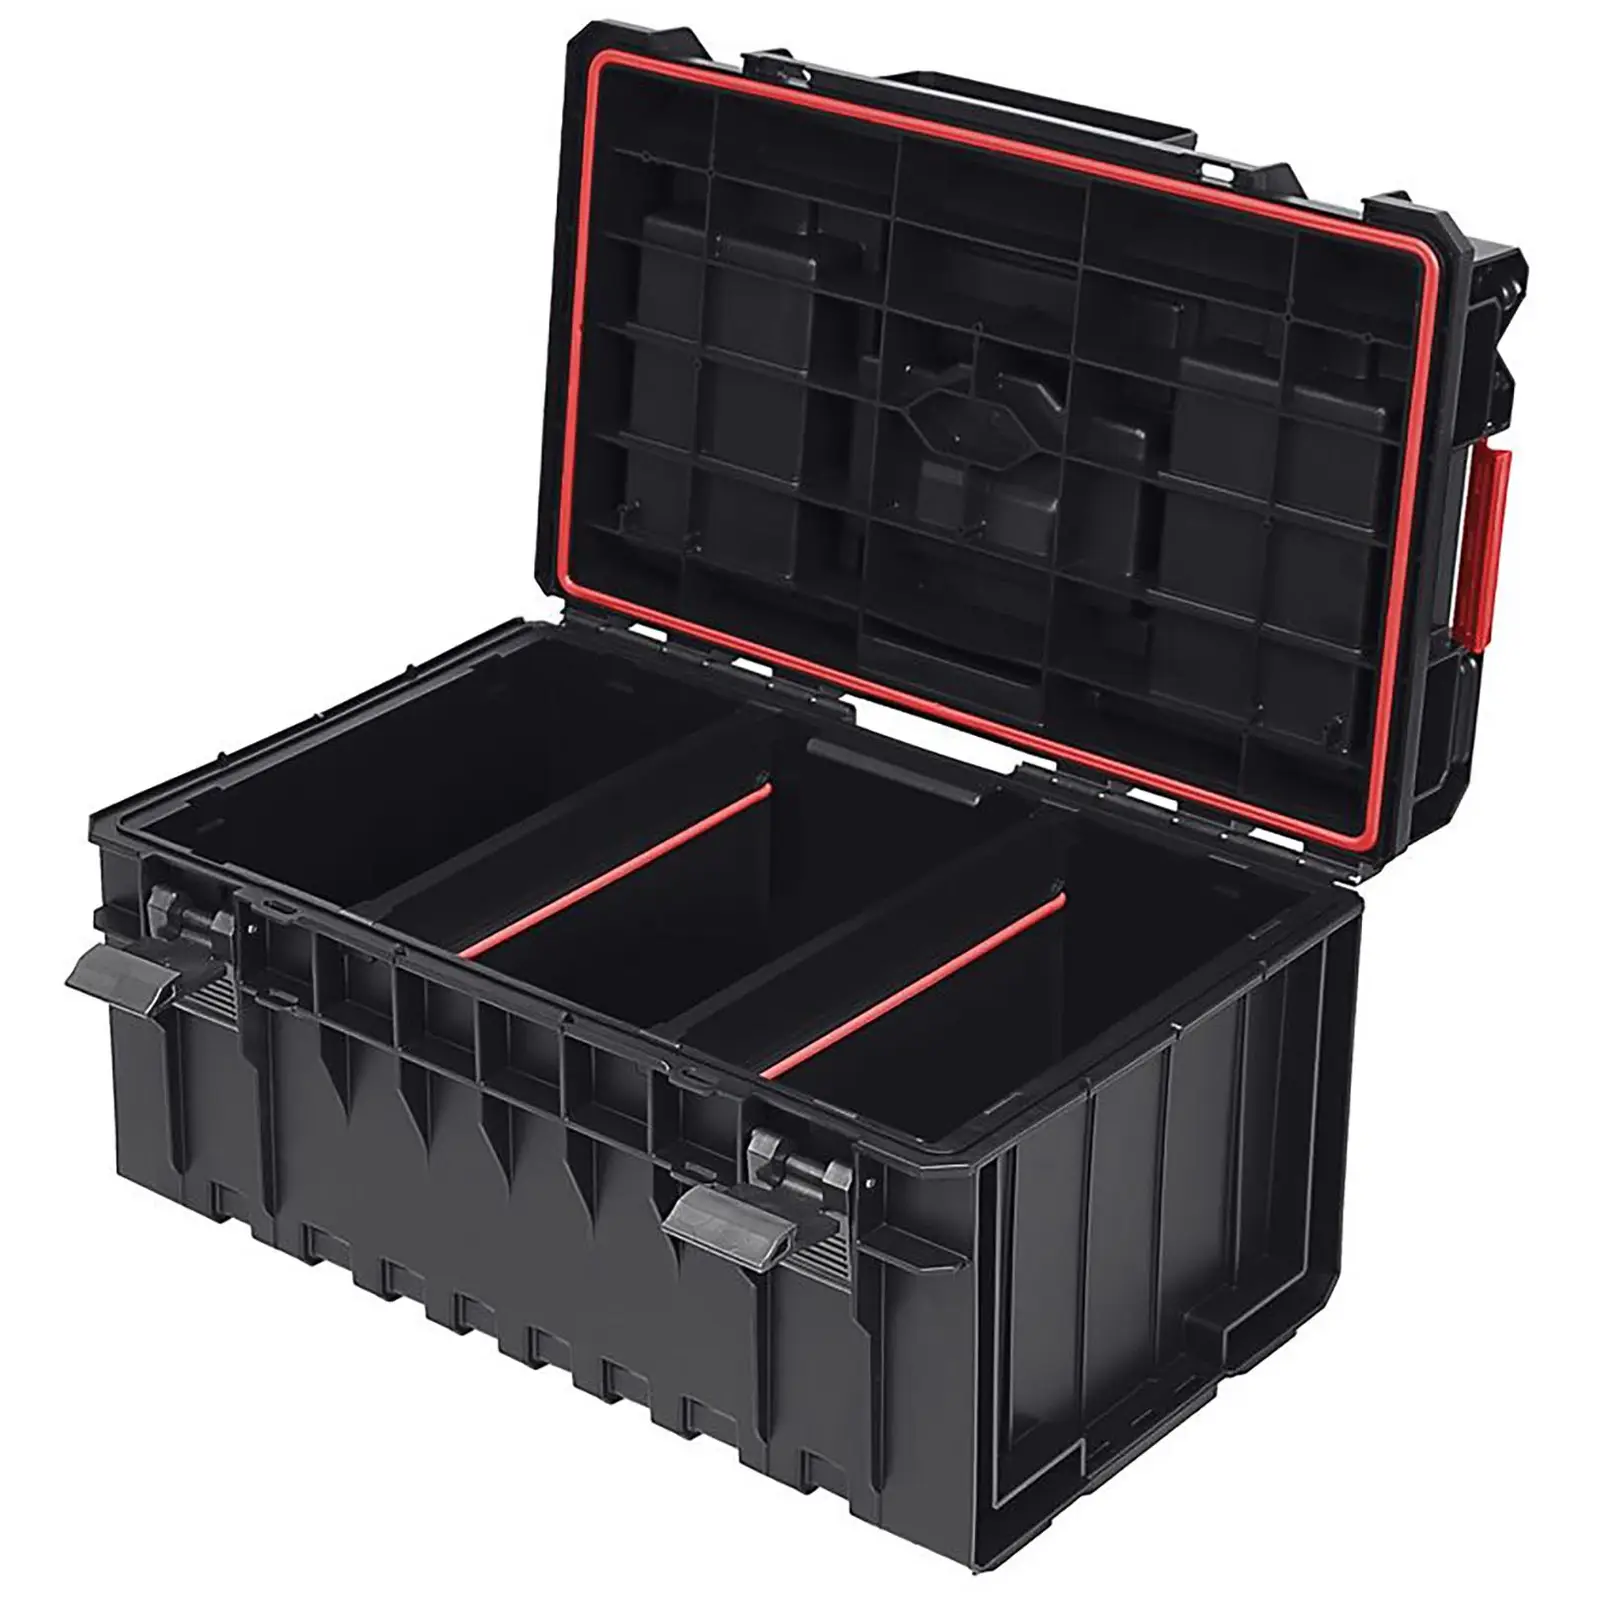 Caja de herramientas con ruedas - Set System One Profi - 3 contenedores - 1 carro